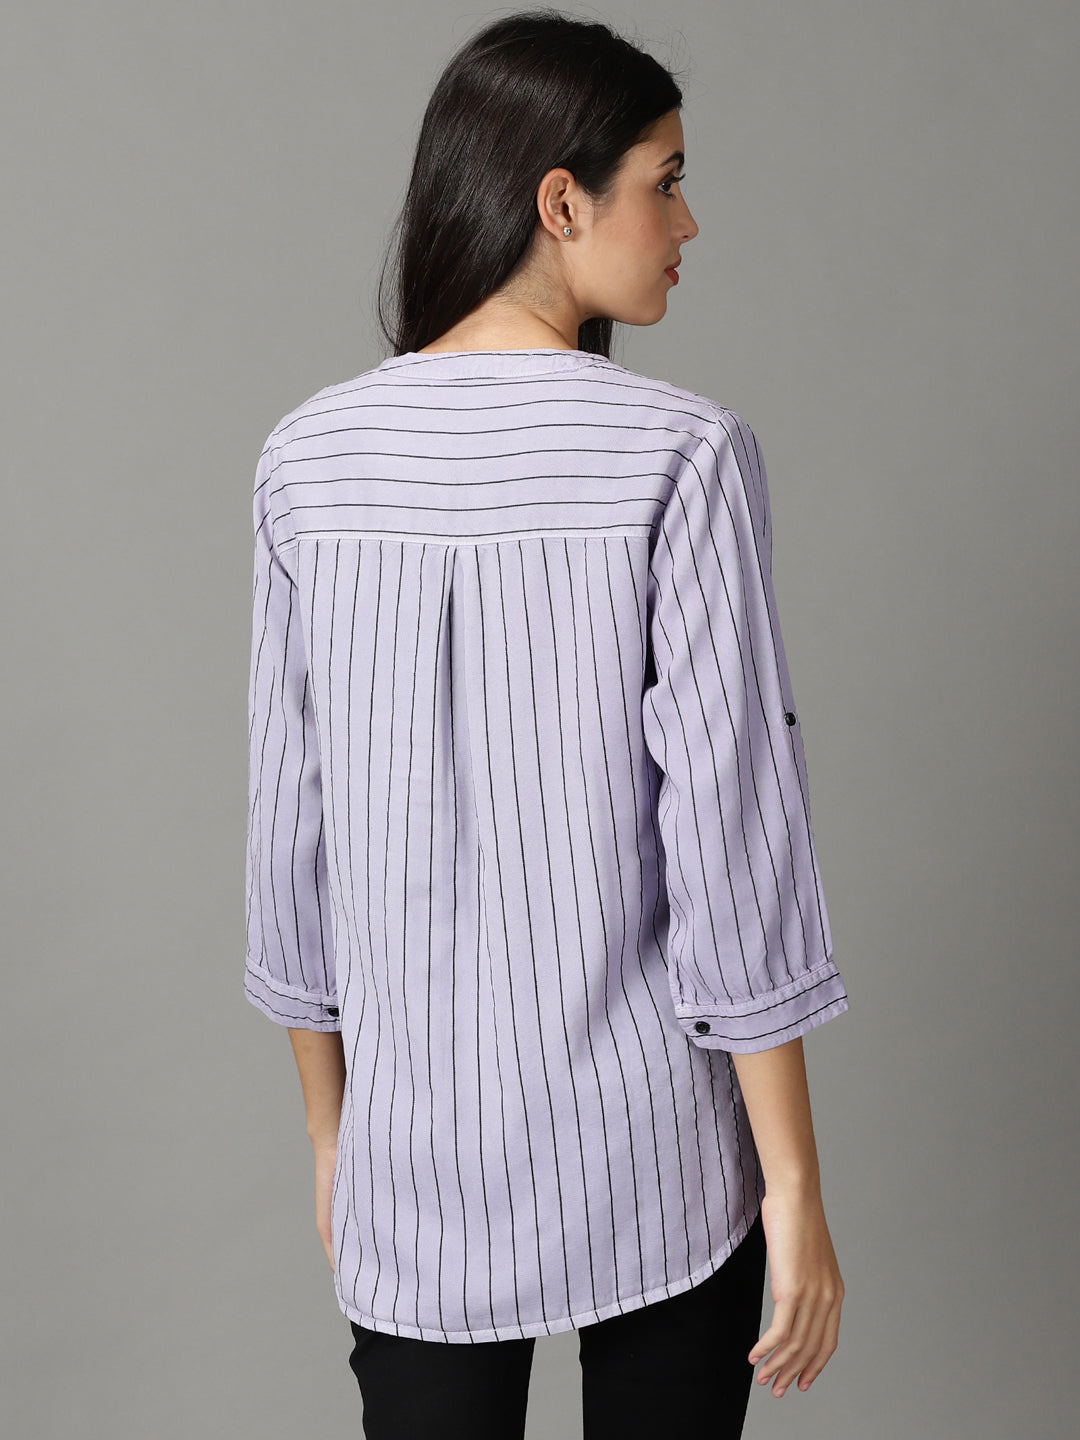 Women's Lavender Striped Top